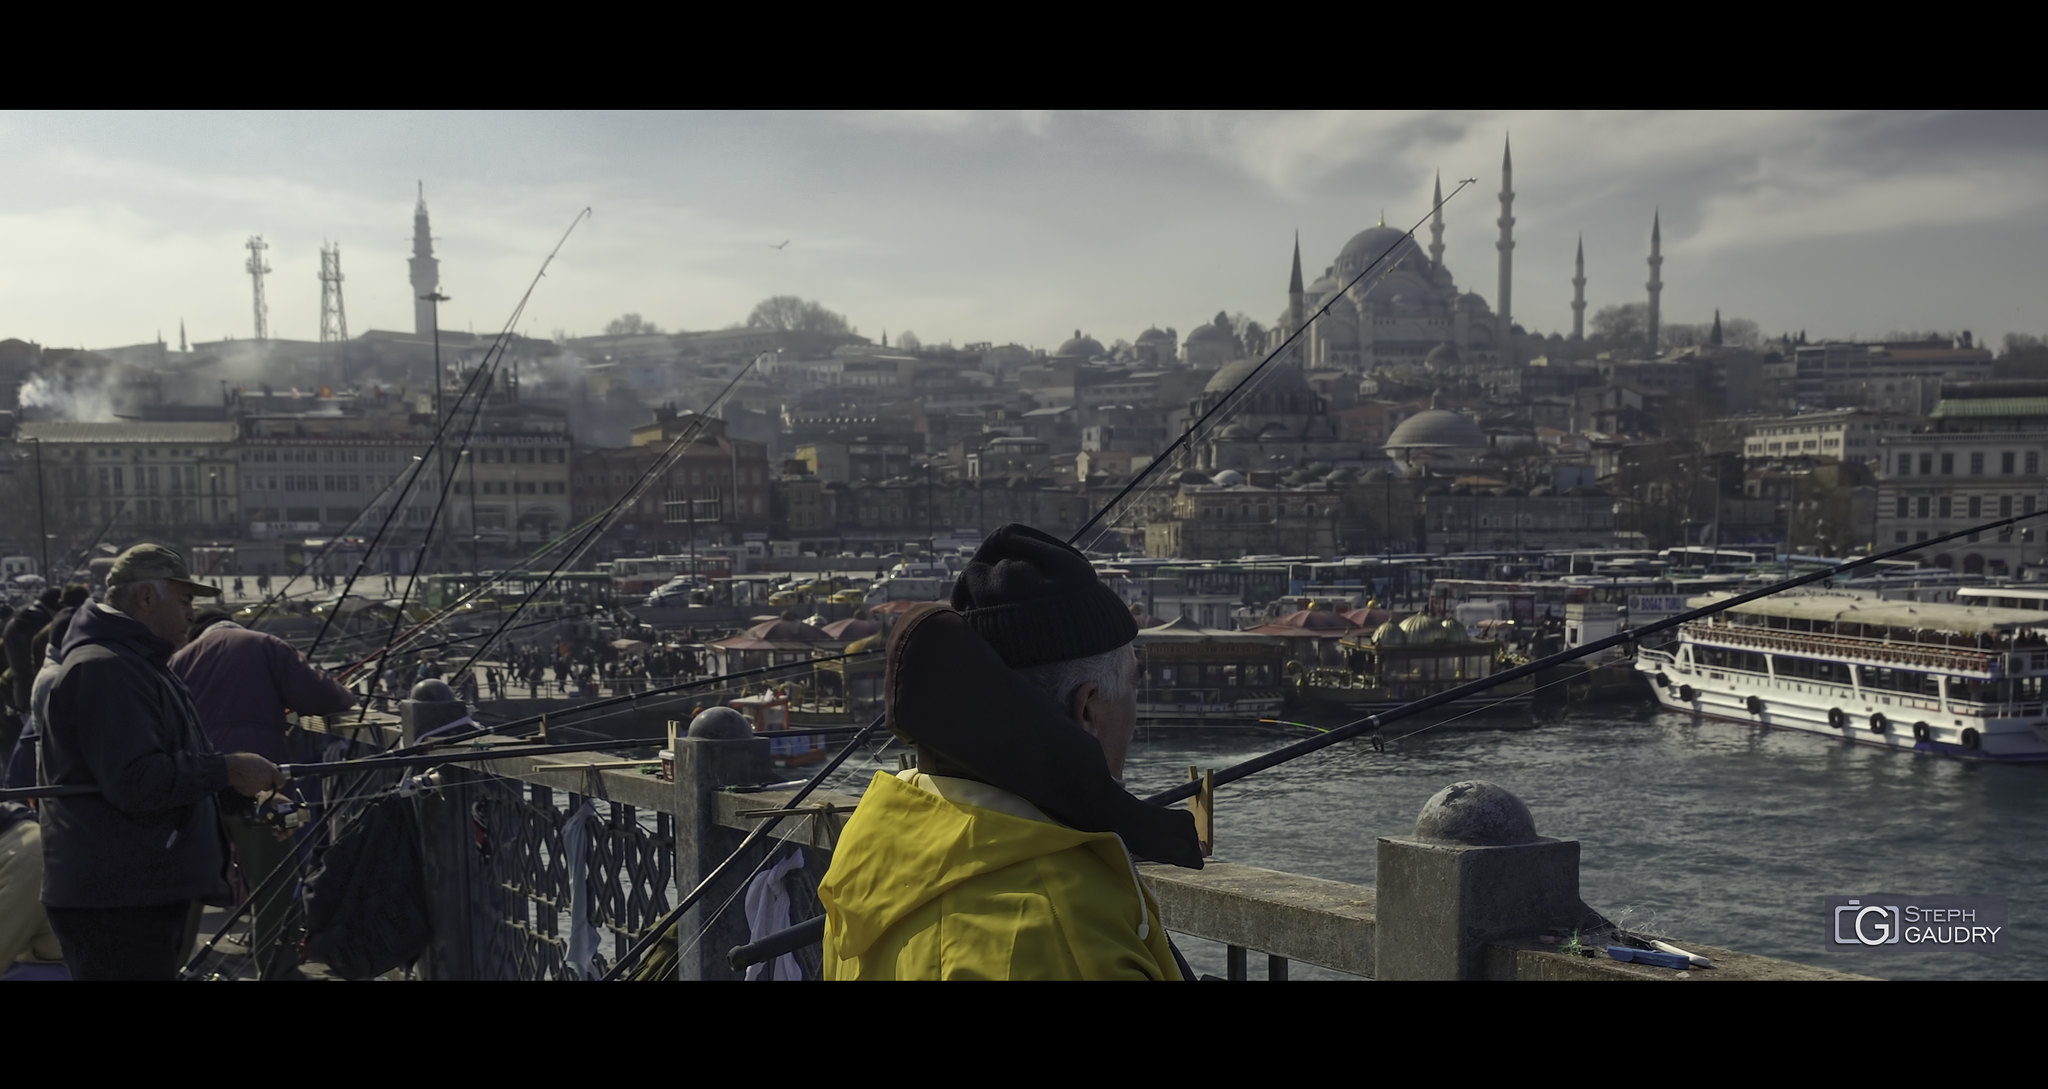 Istanbul, Fishermen on Galata Bridge (cinemascope version) [Click to start slideshow]